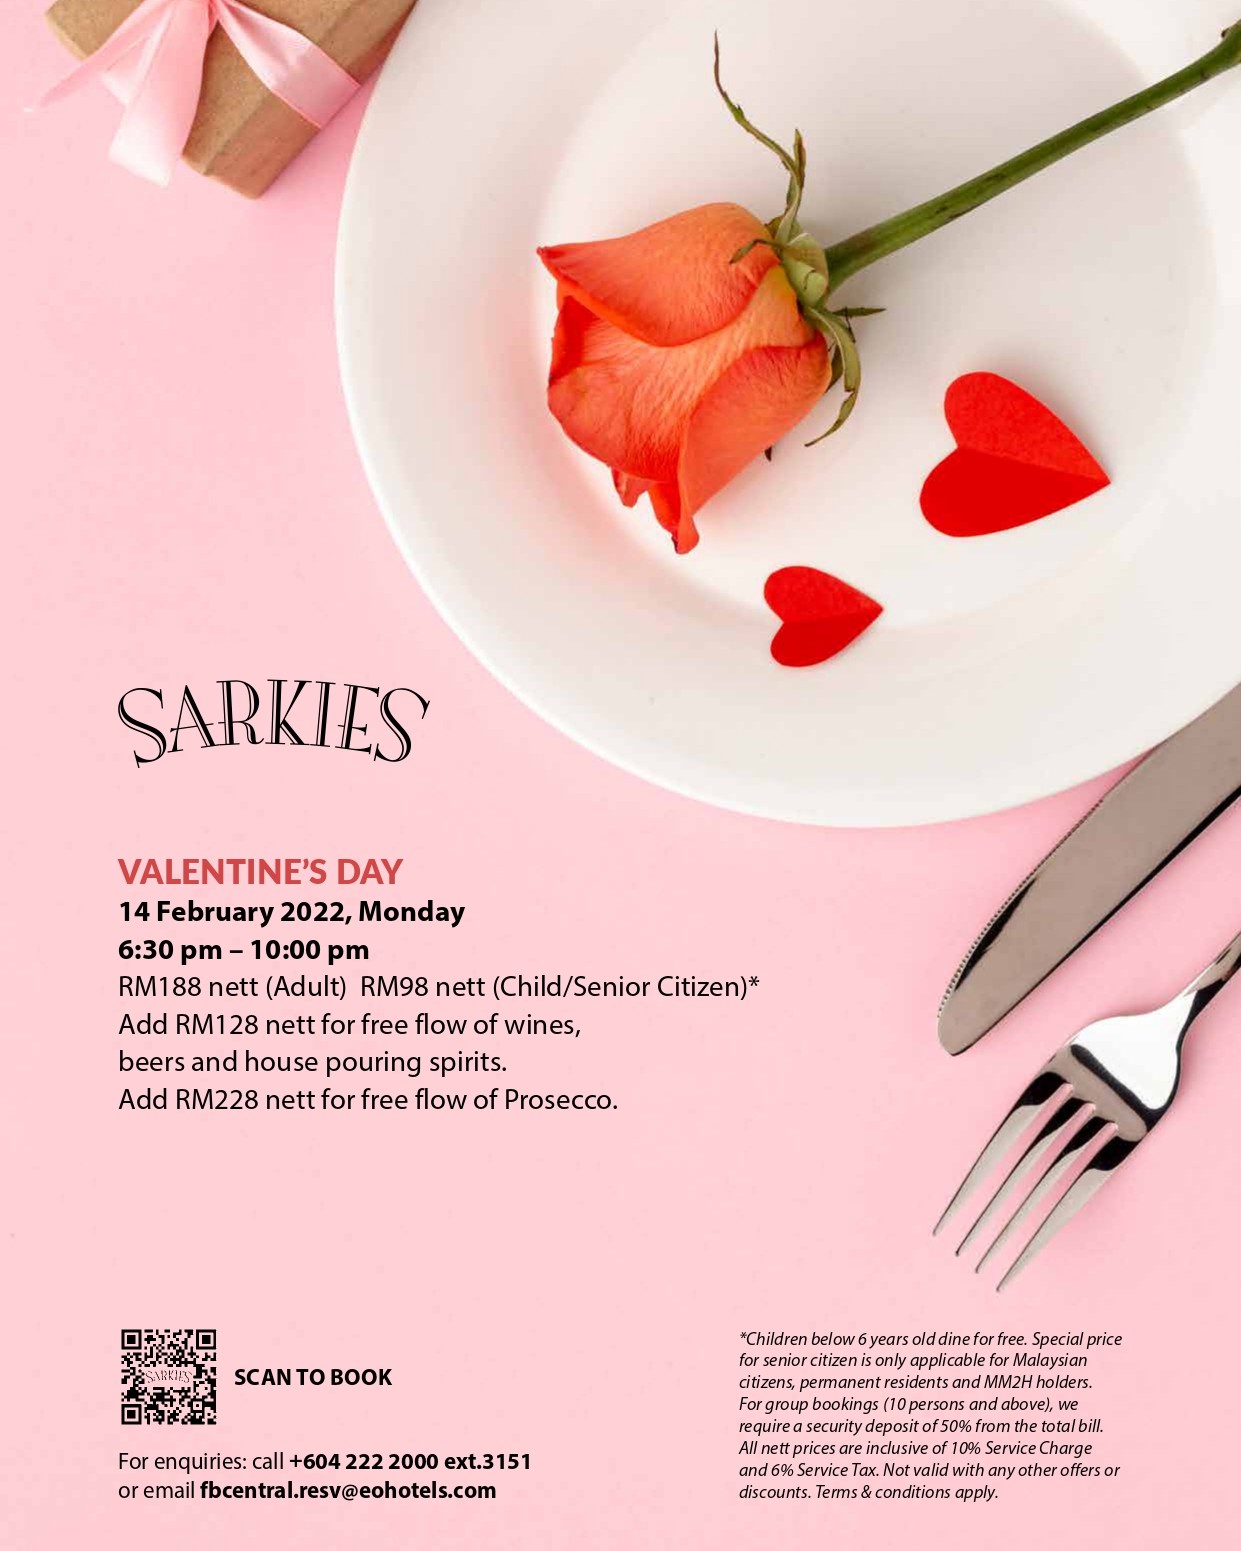 Sarkies Valentine's Day by Eastern & Oriental Hotel